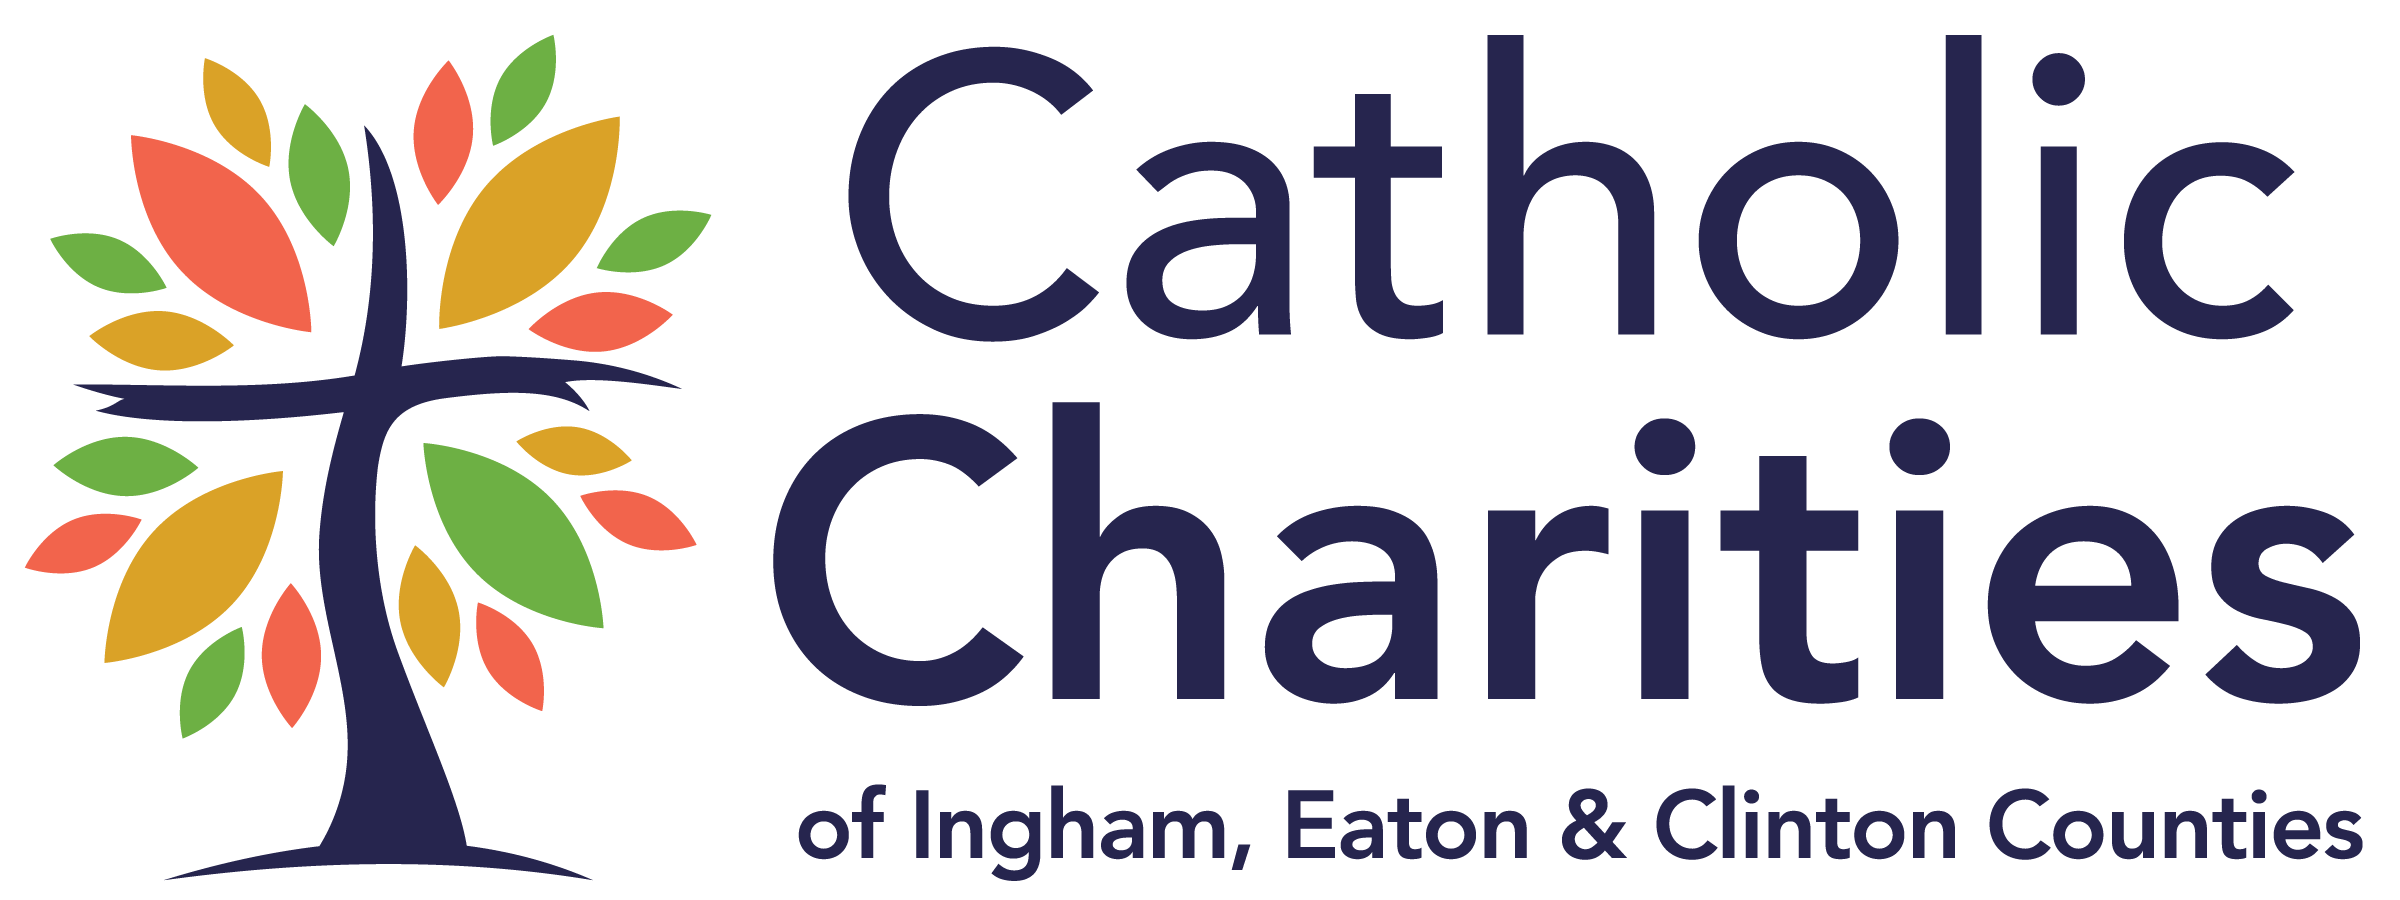 CatholicCharities of Ingham Eaton and Clinton Counties Logo